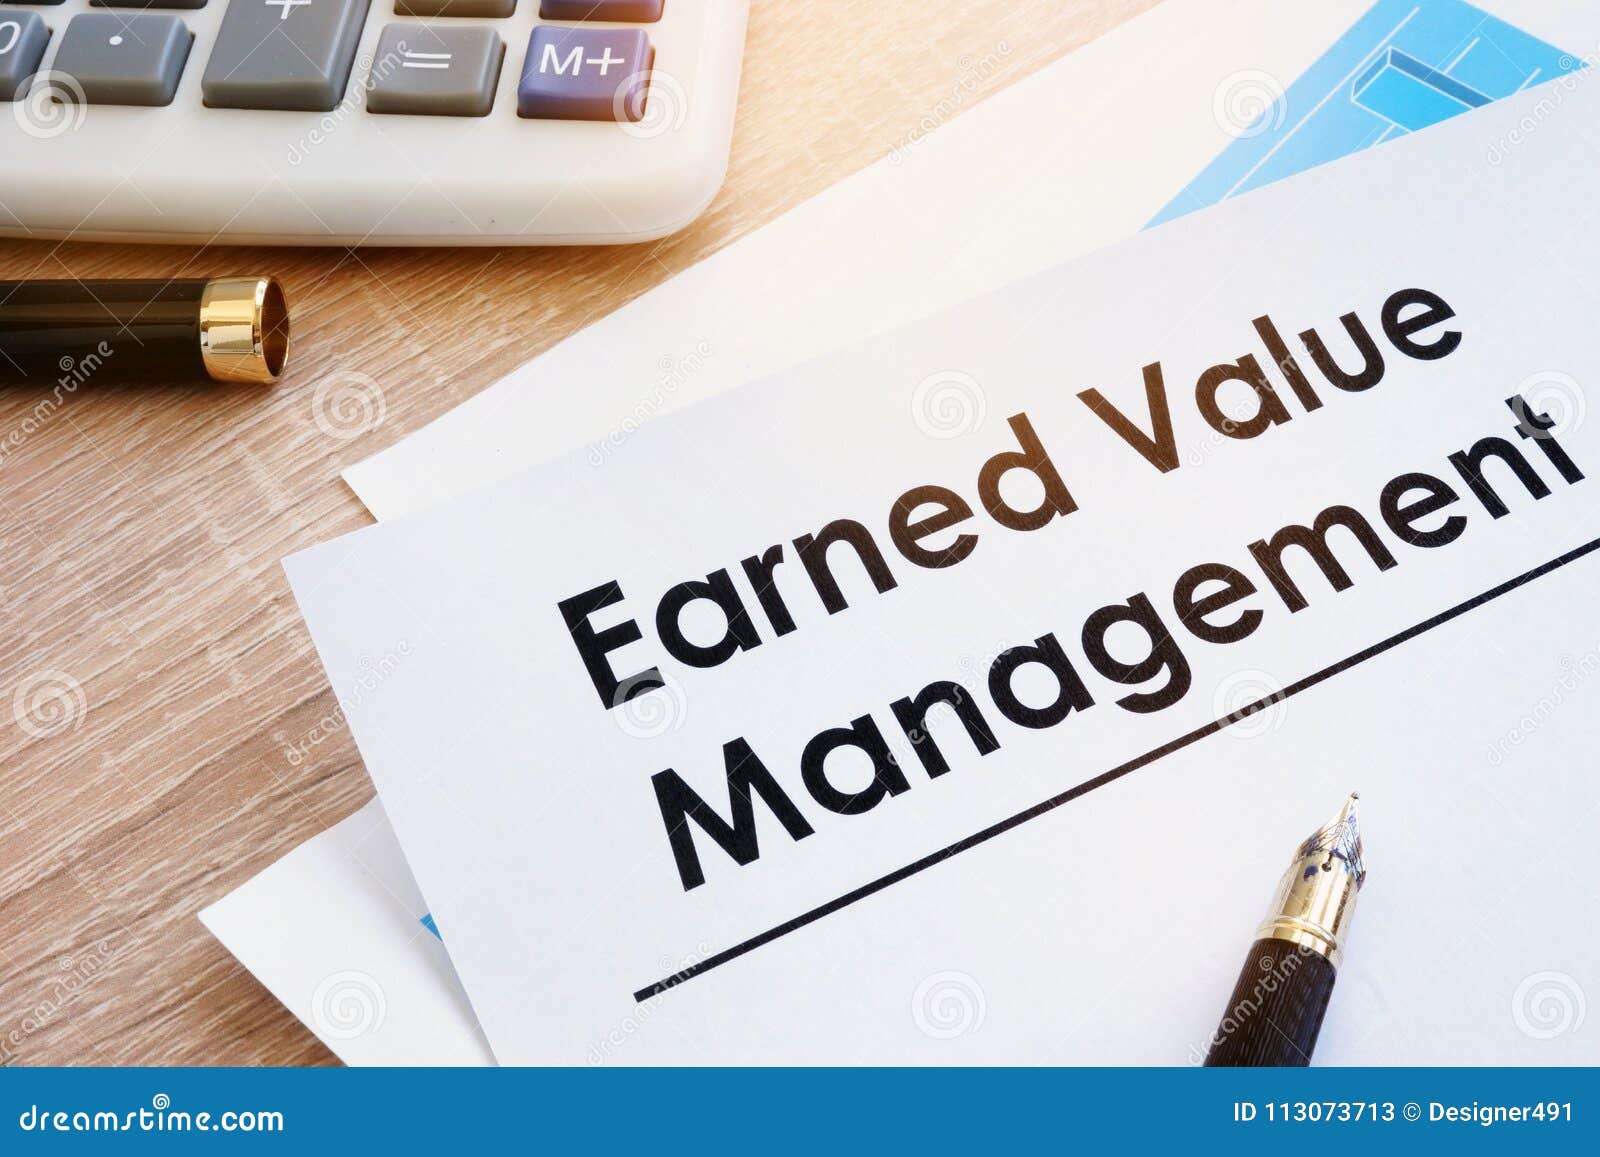 document earned value management on a desk.